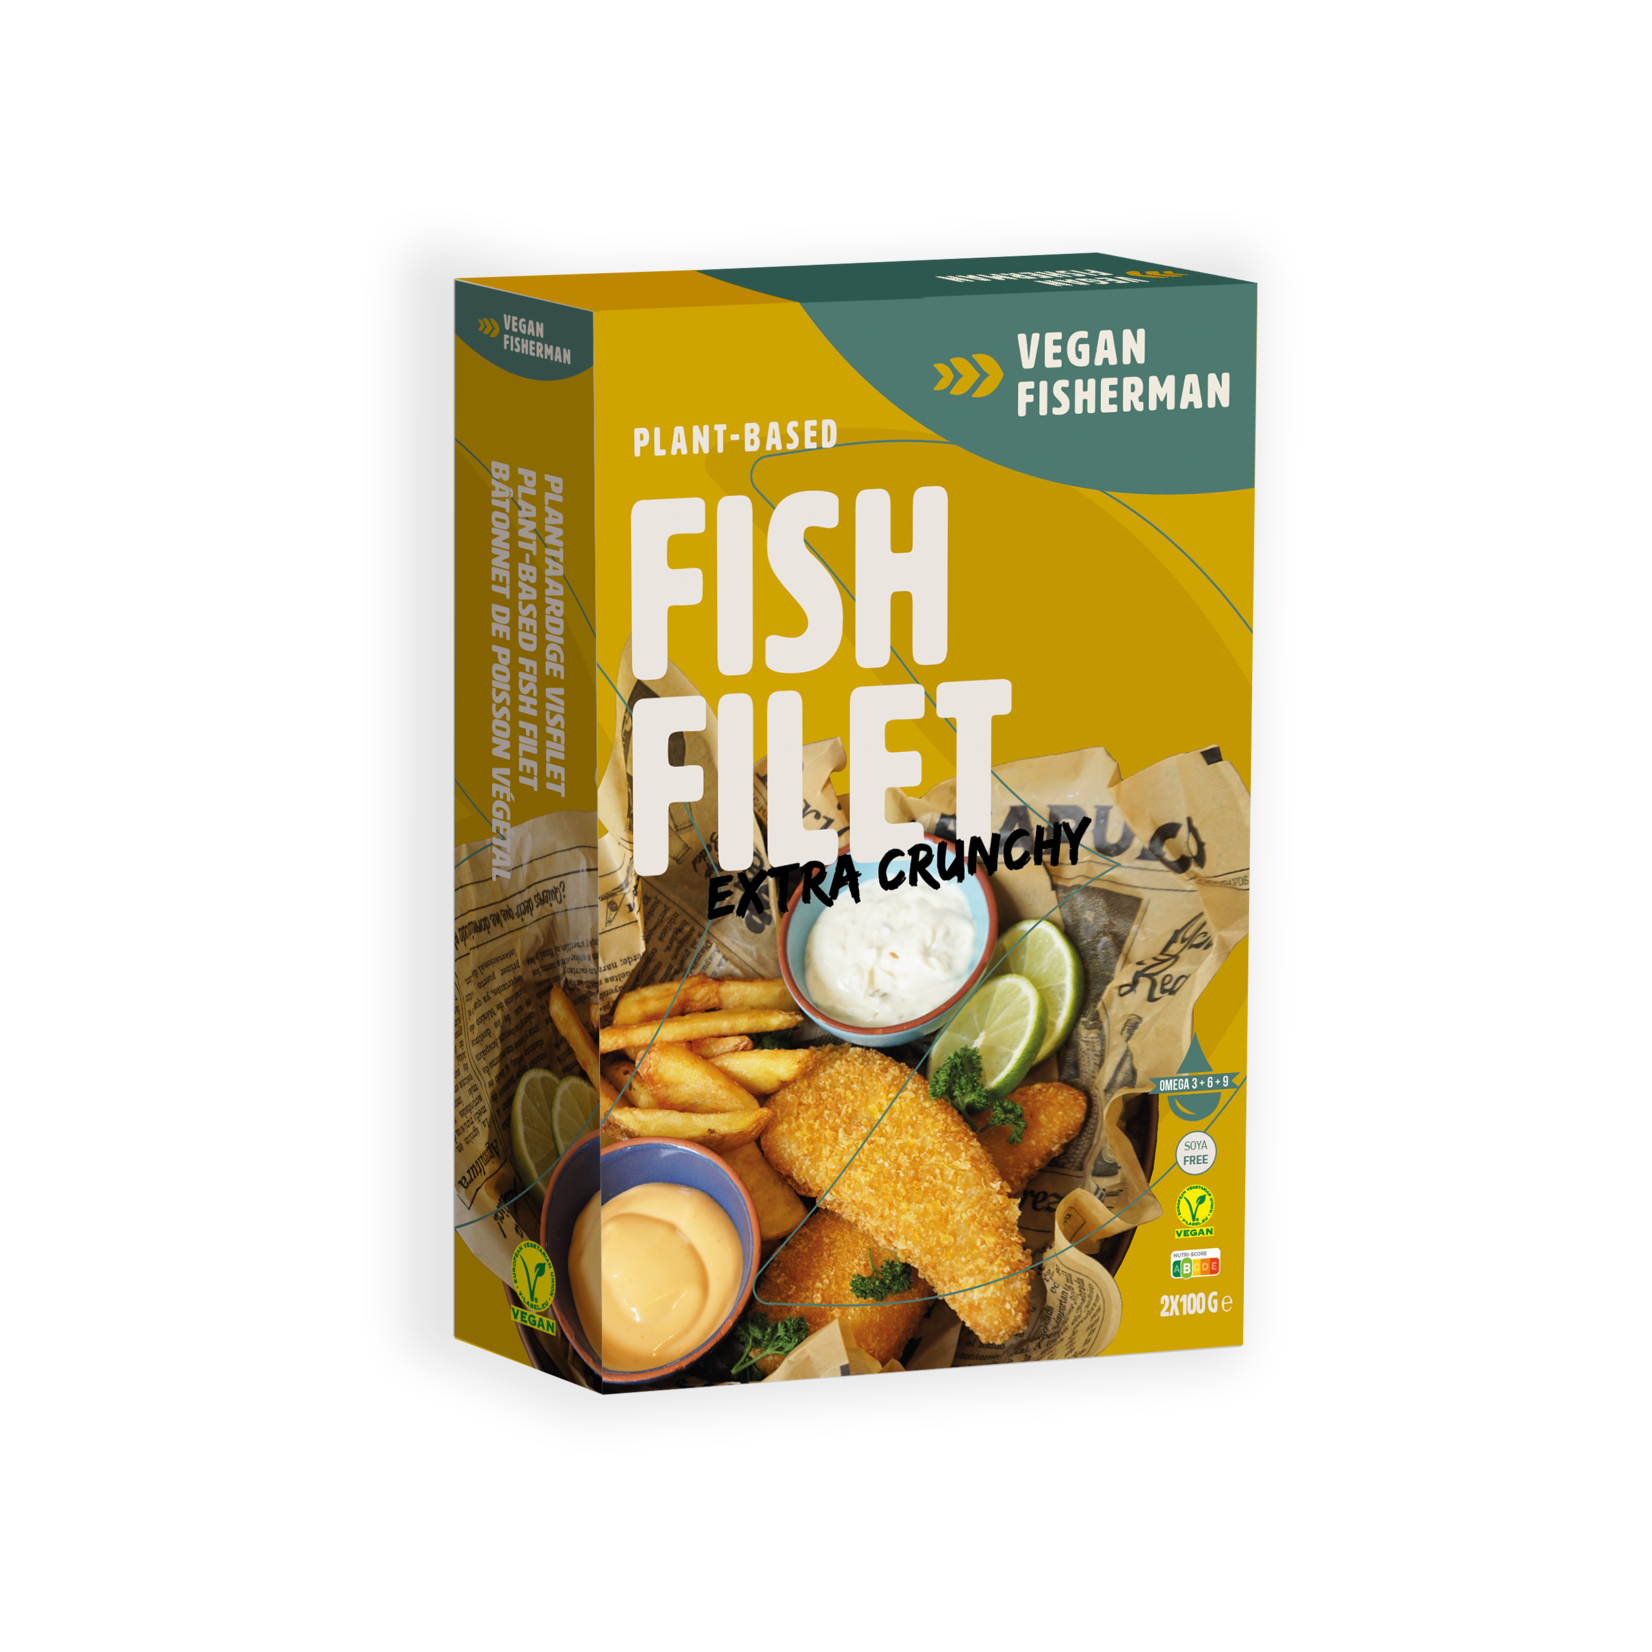 Vegan Visboer - Vegan Fisherman Vegan Visboer filet | De plantaardige visvervanger | Visvriendelijk en gezond